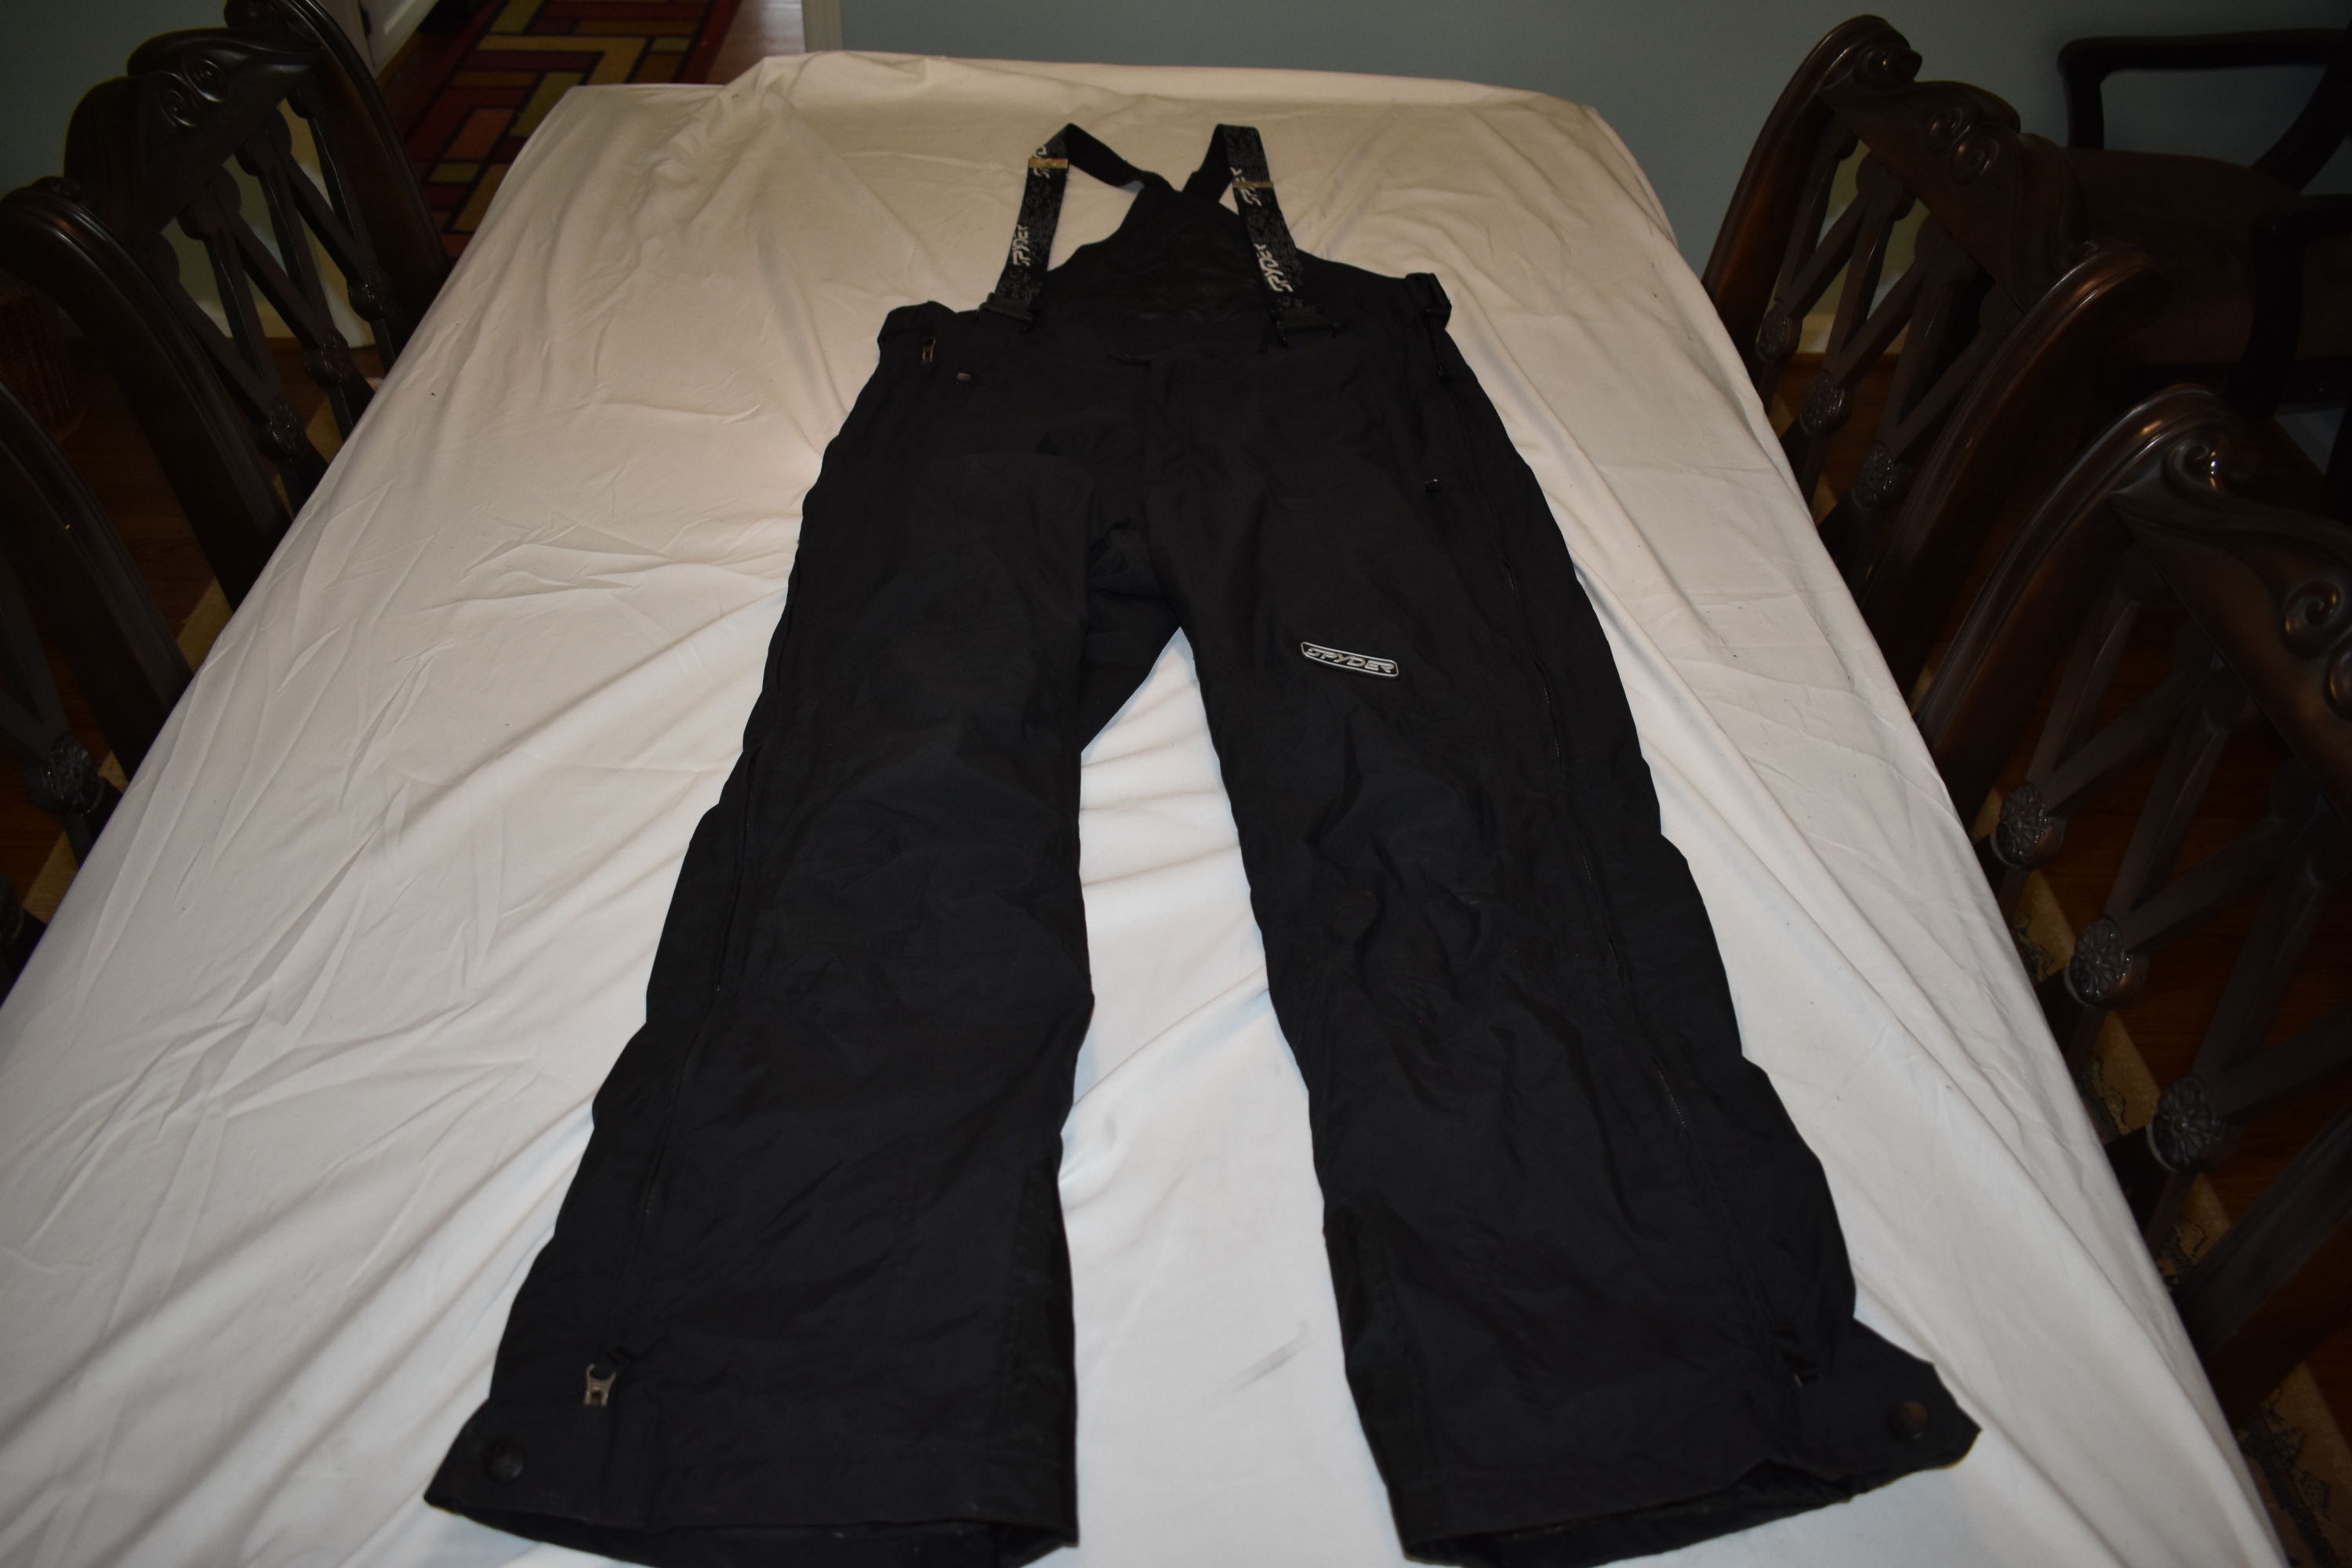 Spyder Thinsulate Winter Sports Ski Pants/Bib, Black, Men's Large - Great Condition!